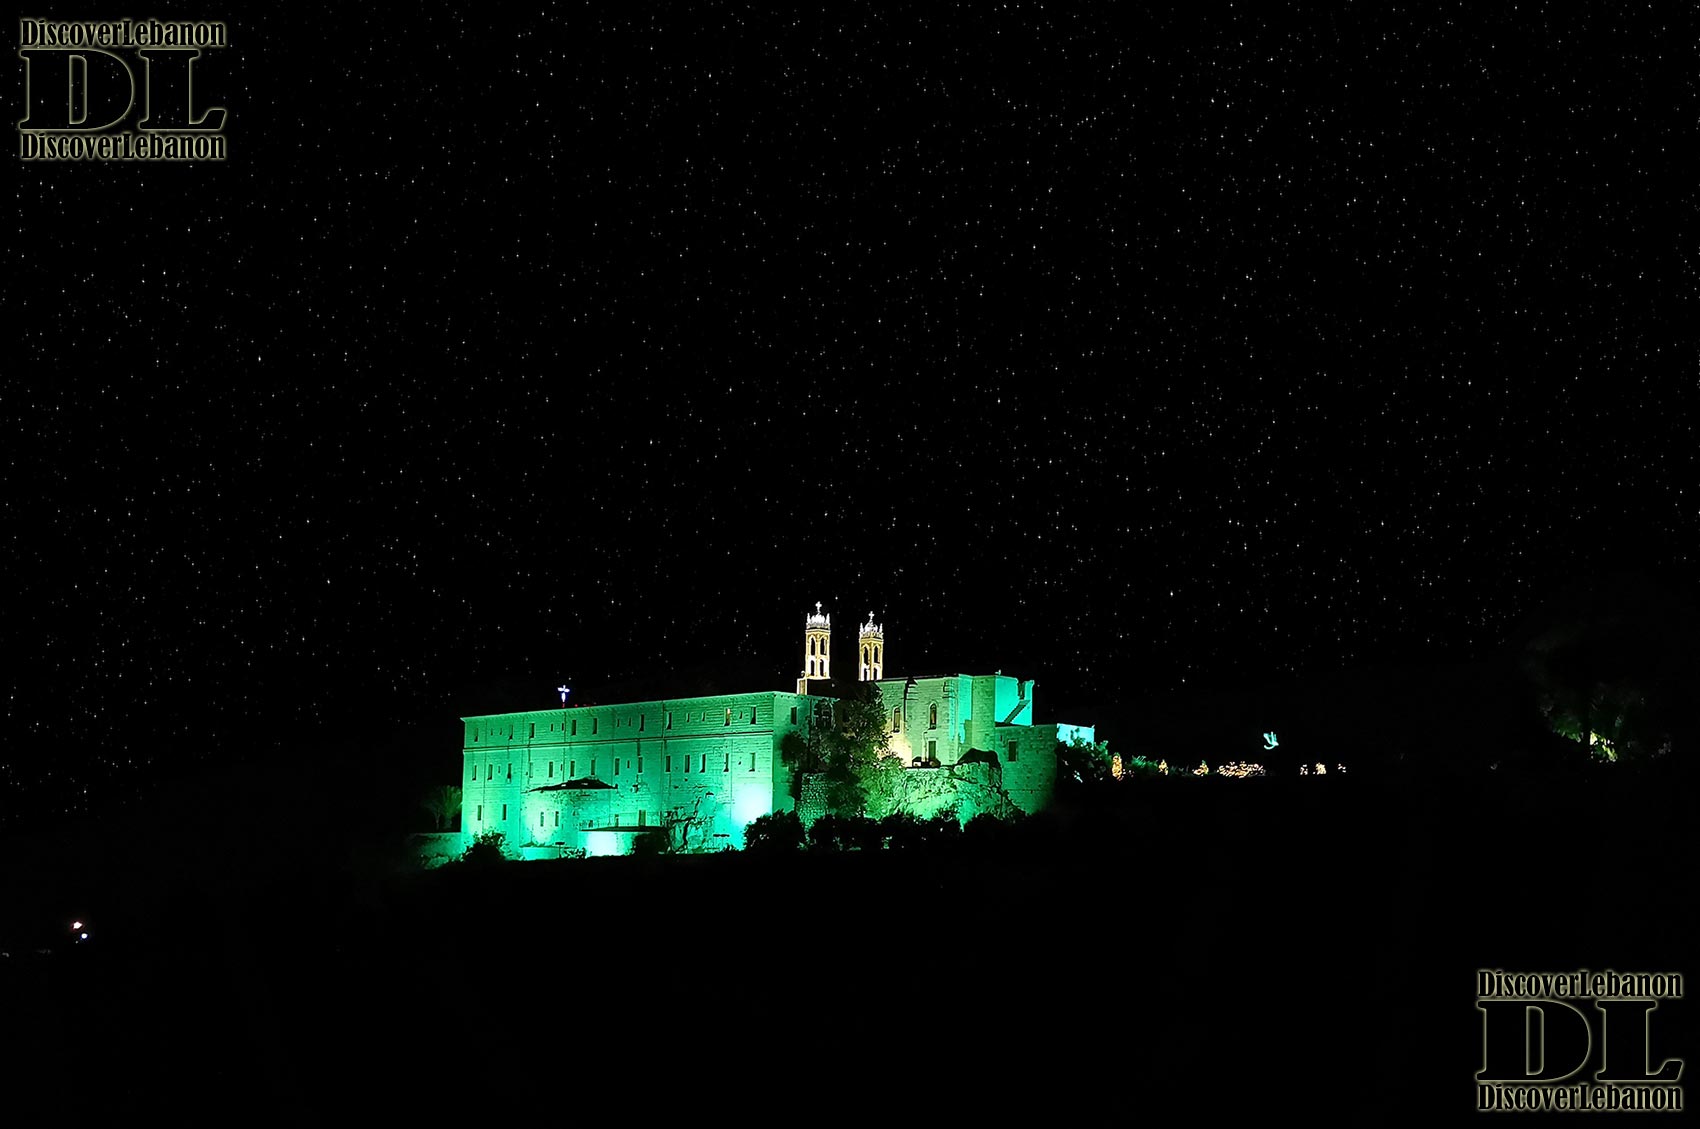 Deir Maounet Deir el Banet Monastery in Lebanon stars twinkle